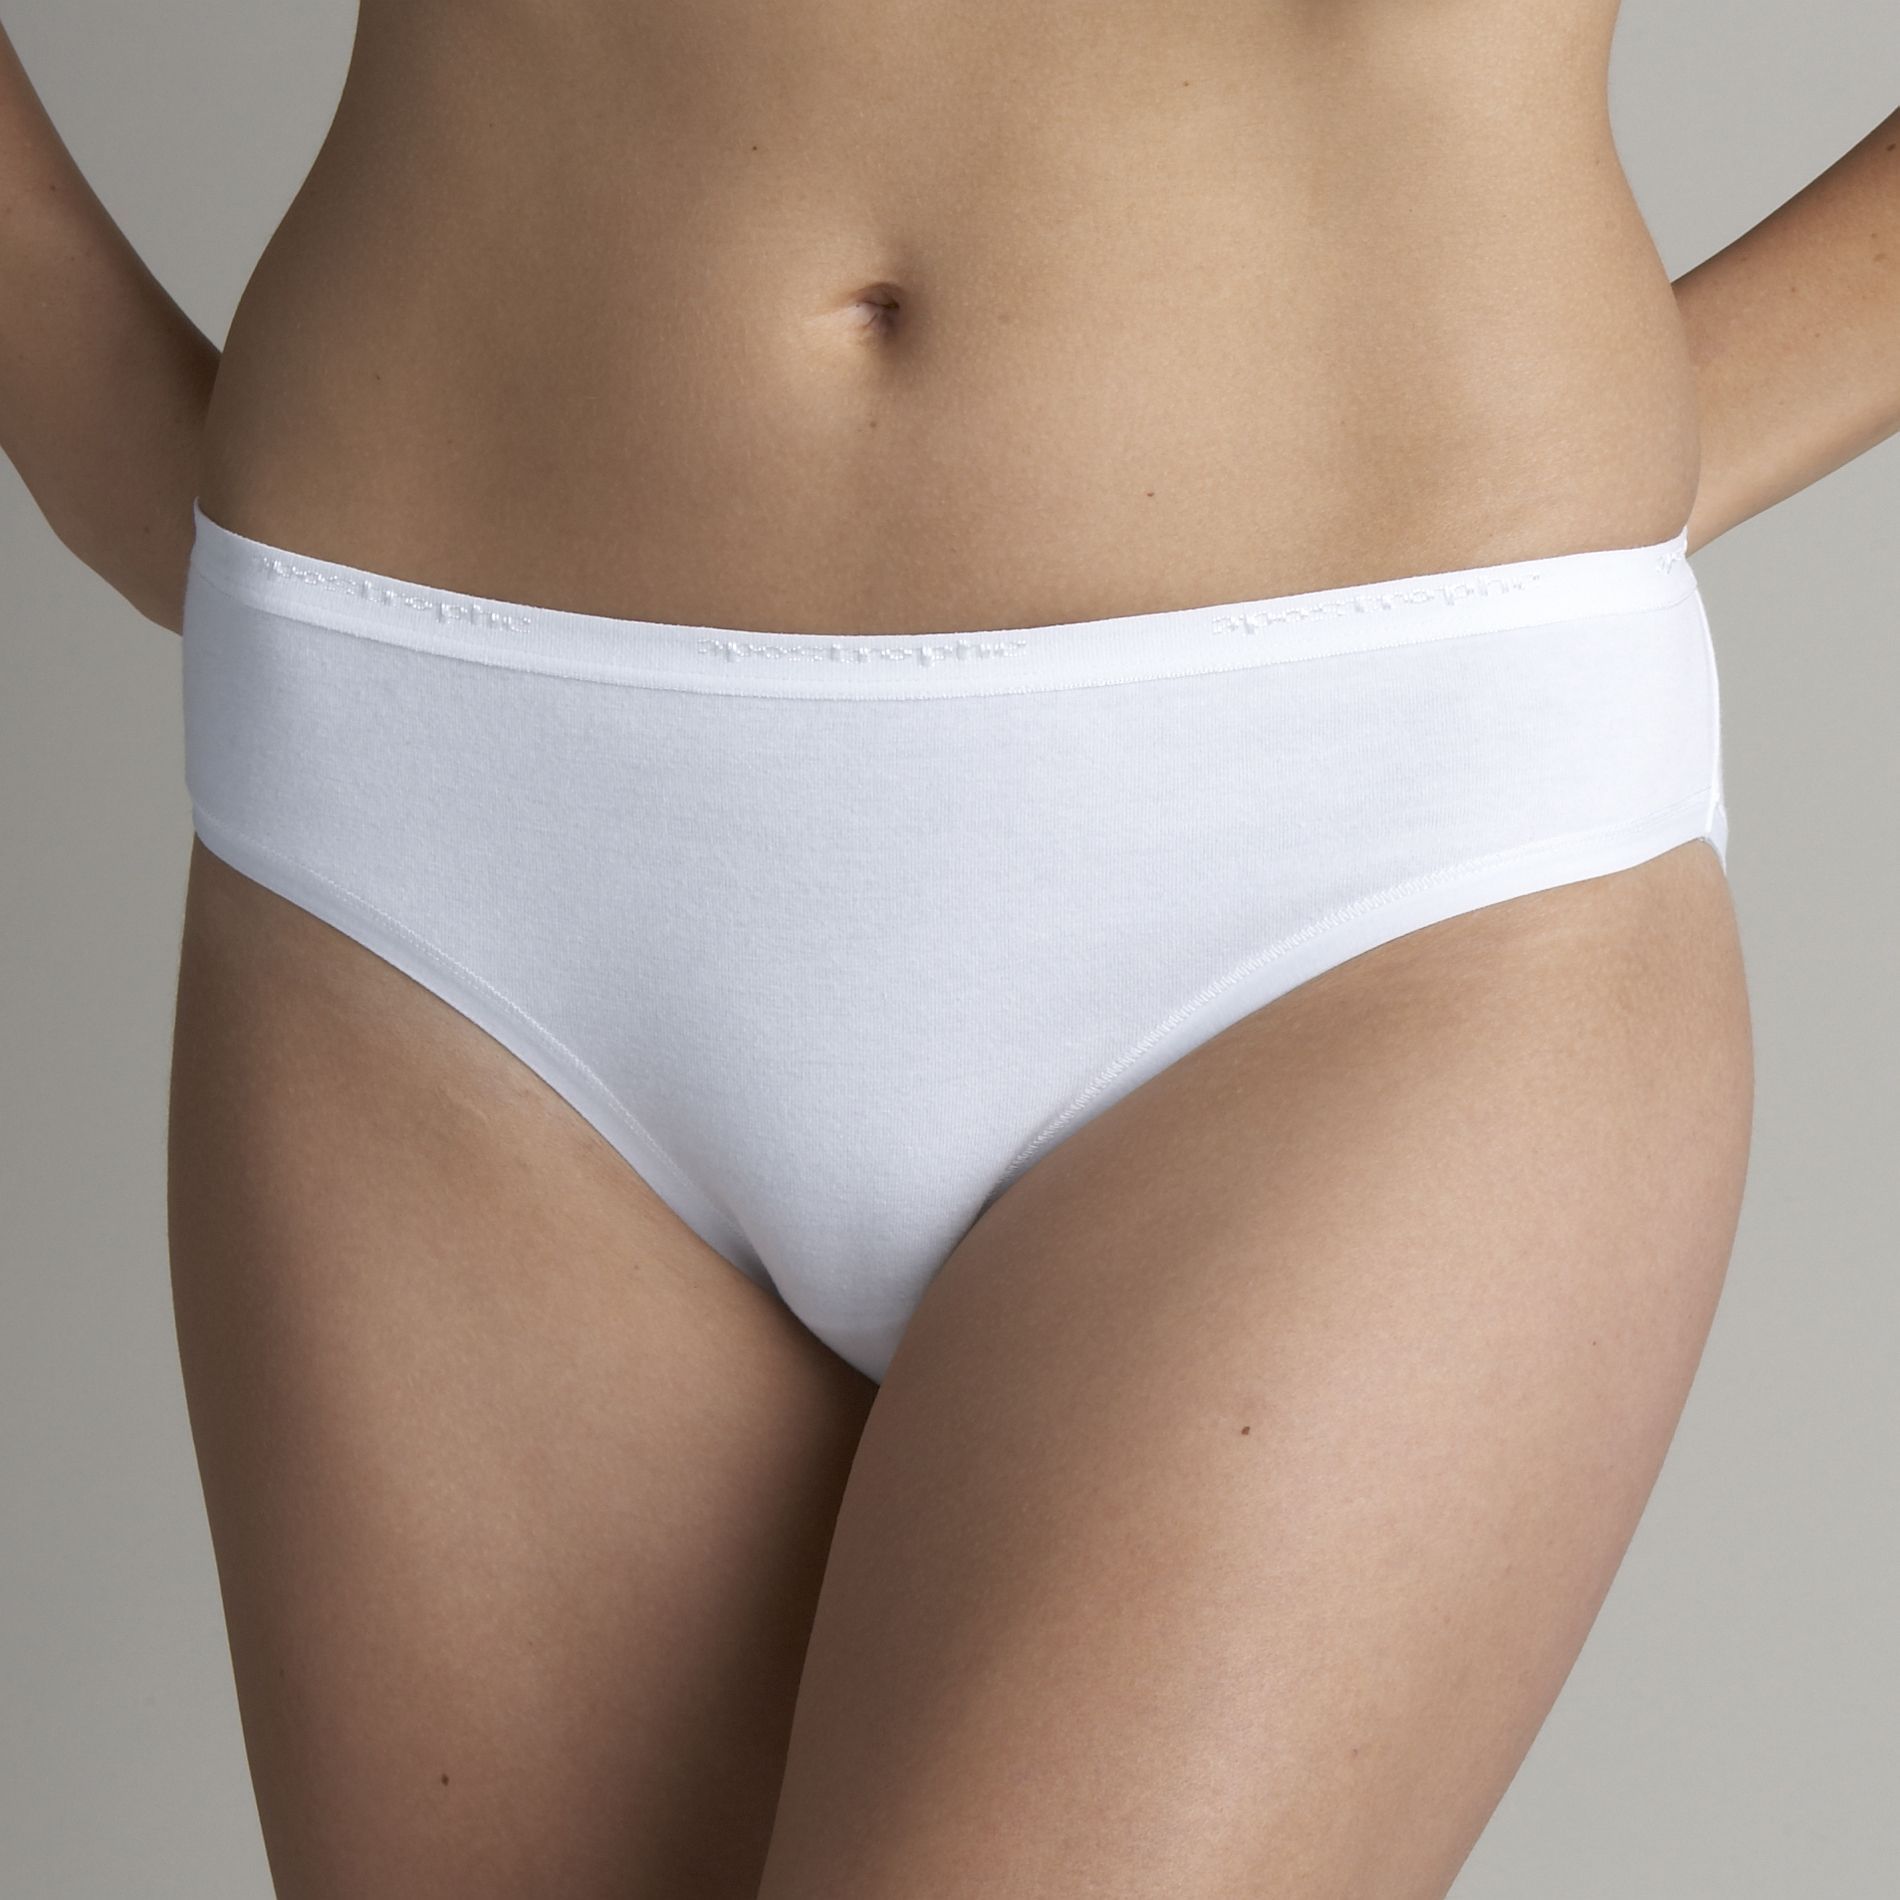 brenda duenez recommends ladies in white panties pic